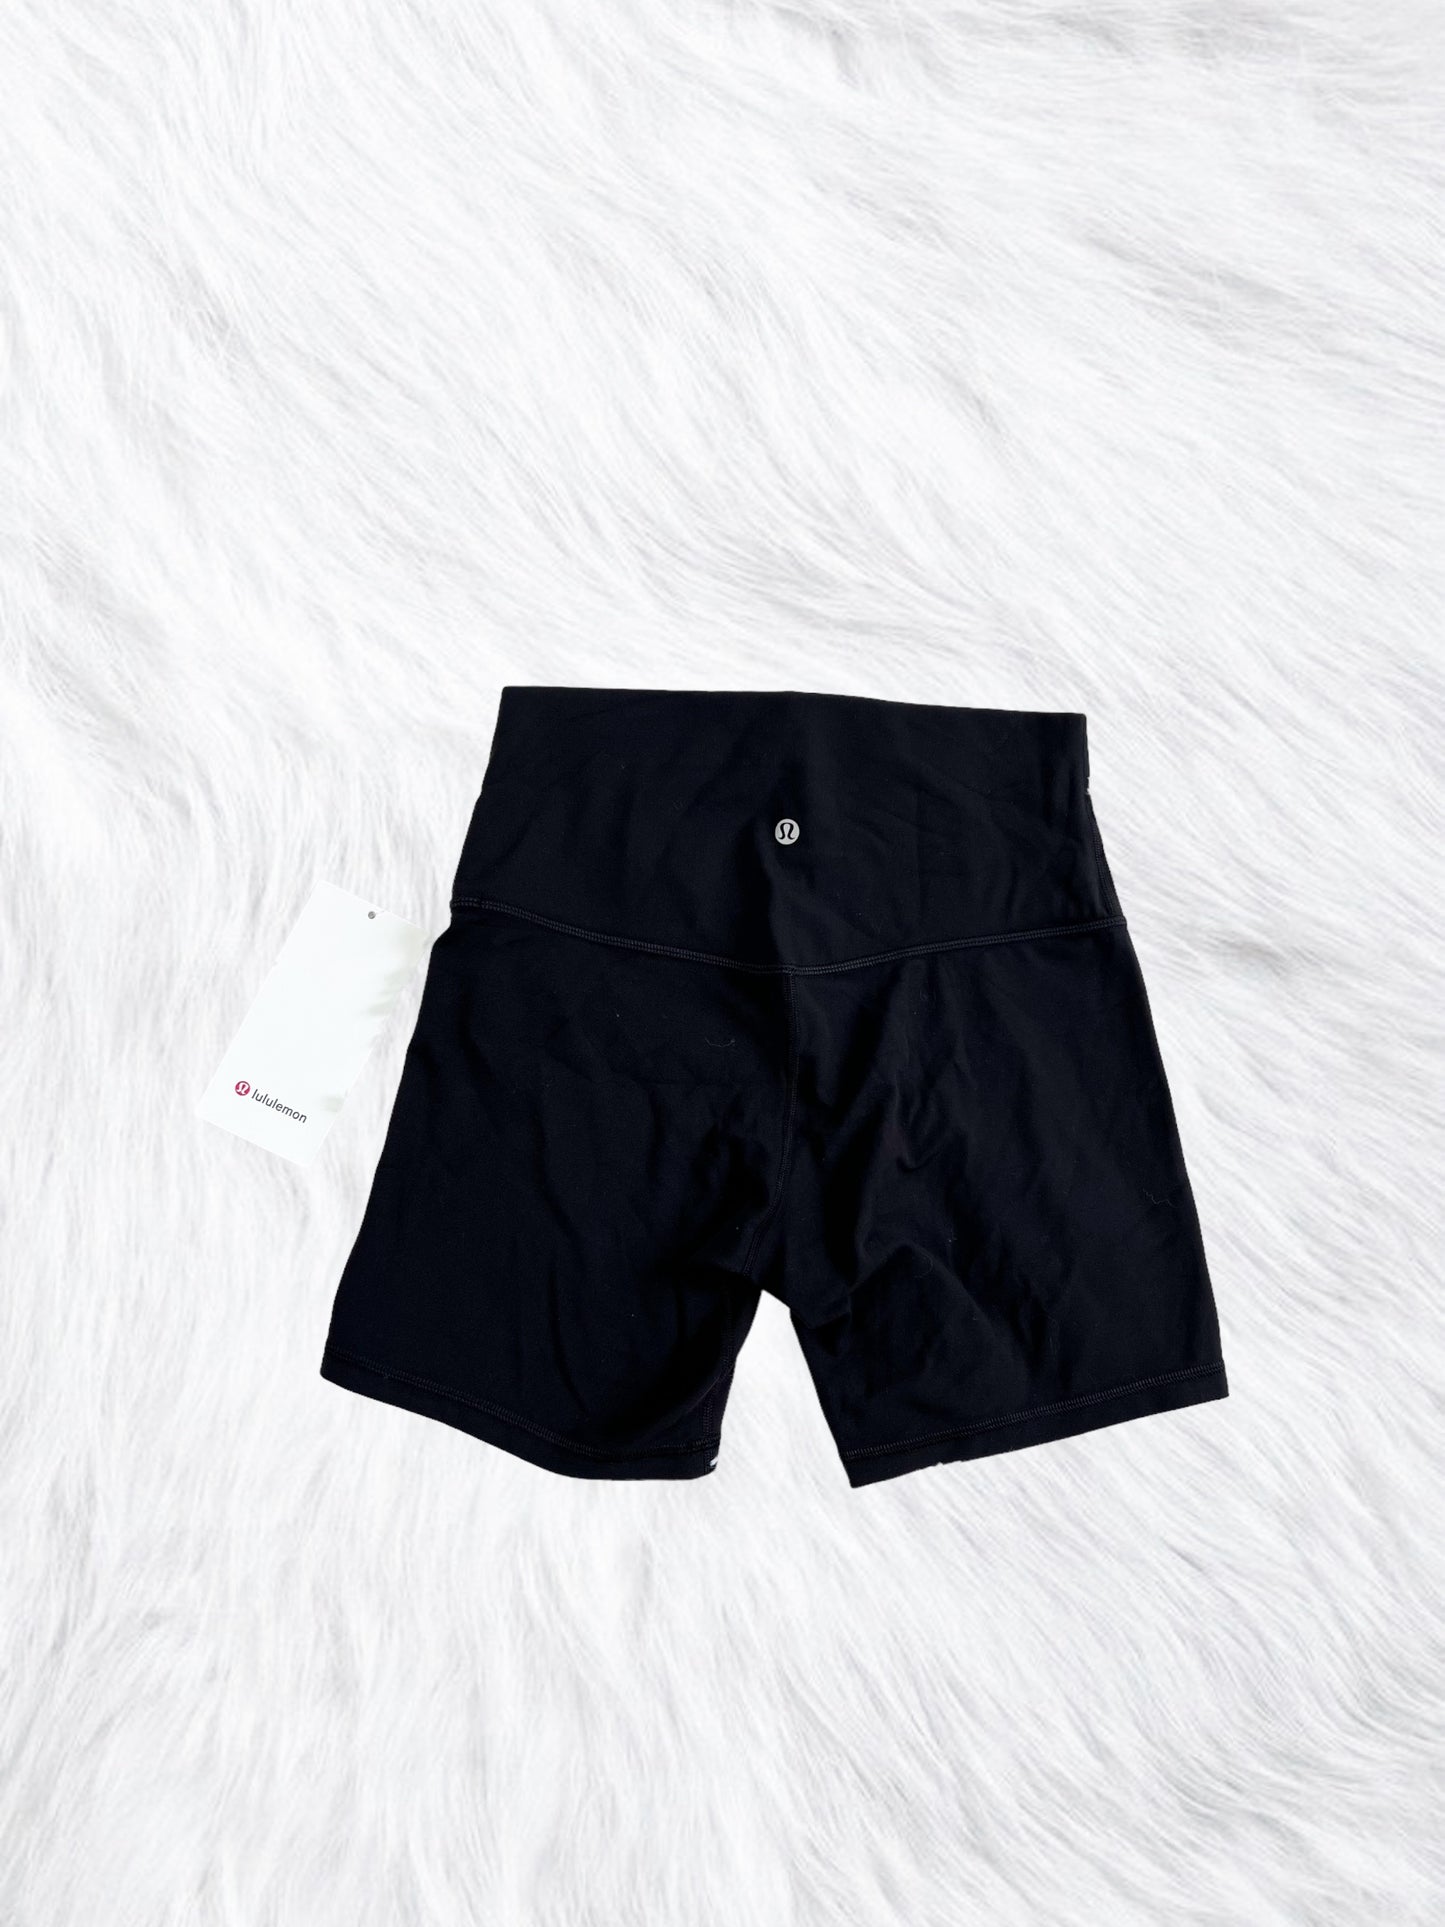 Align Shorts 4” Black